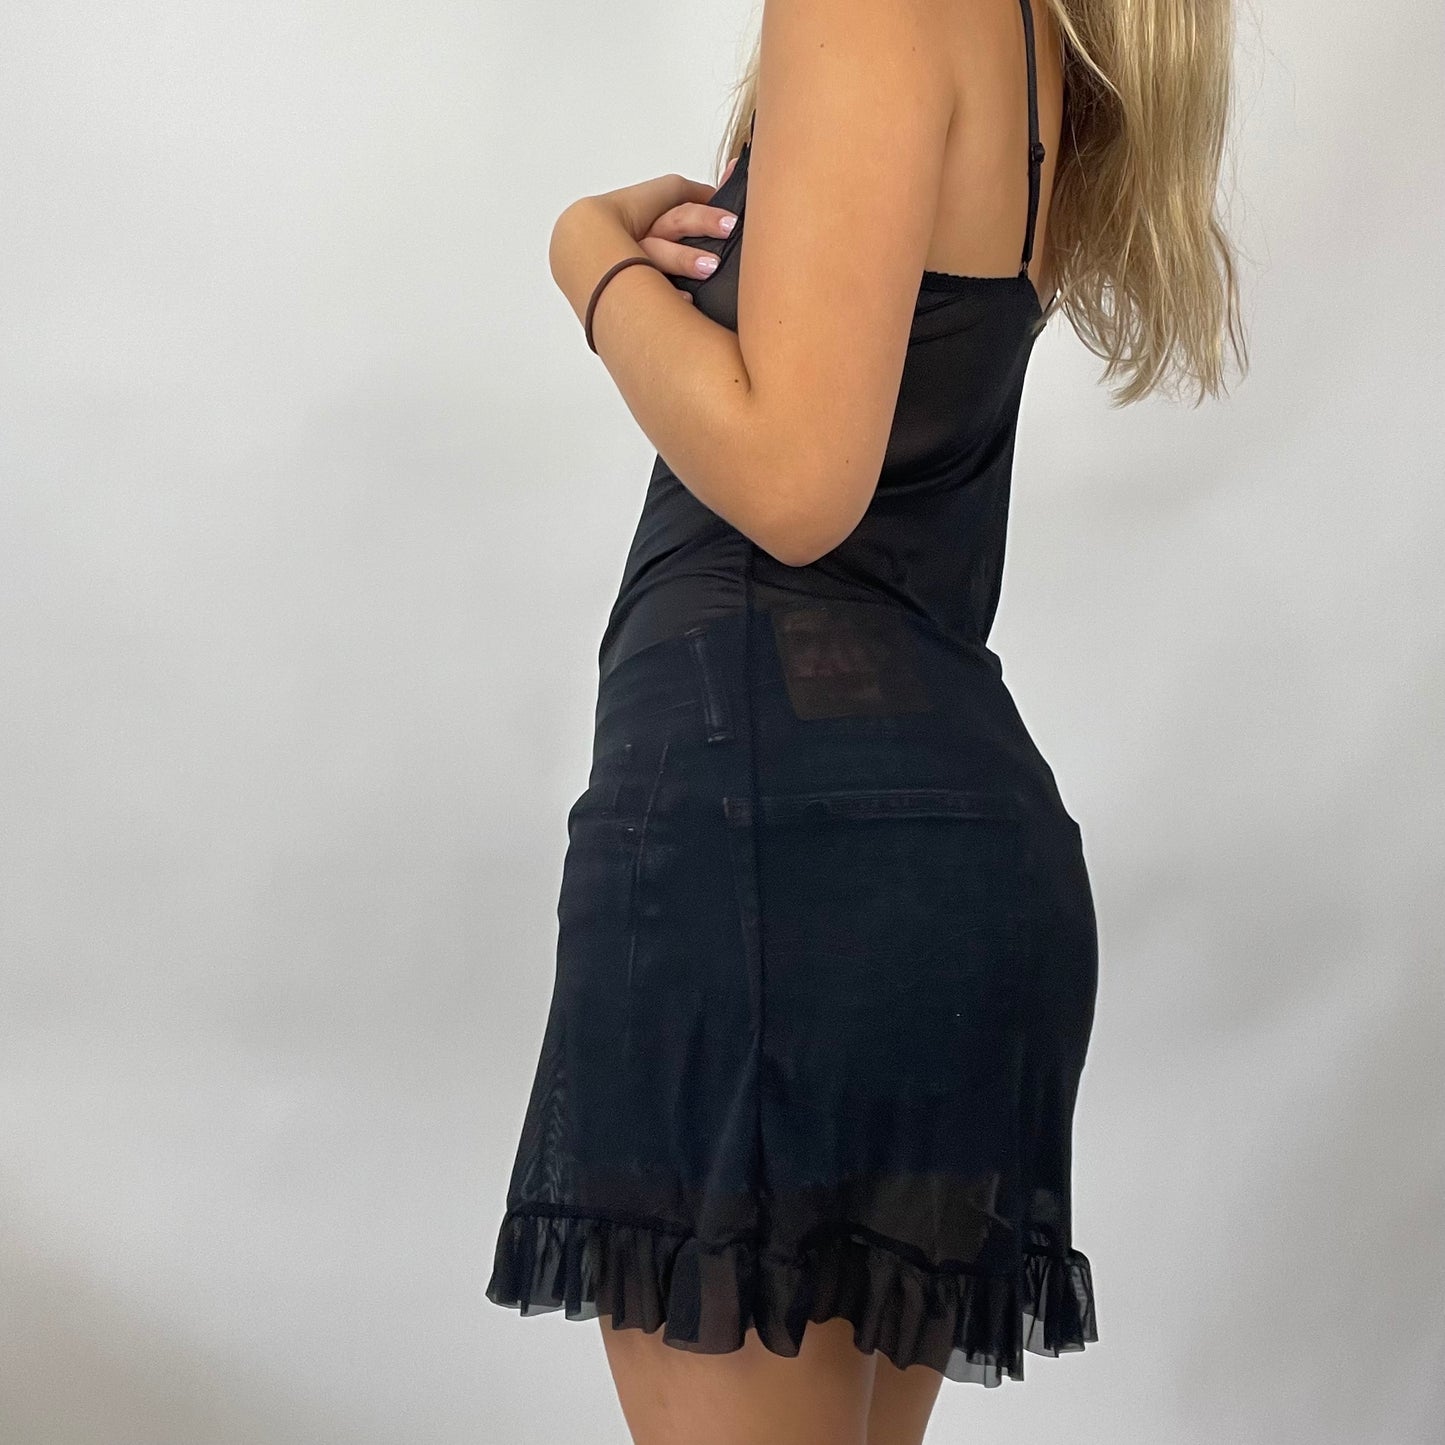 HAILEY BIEBER DROP | small black mesh ruffle dress